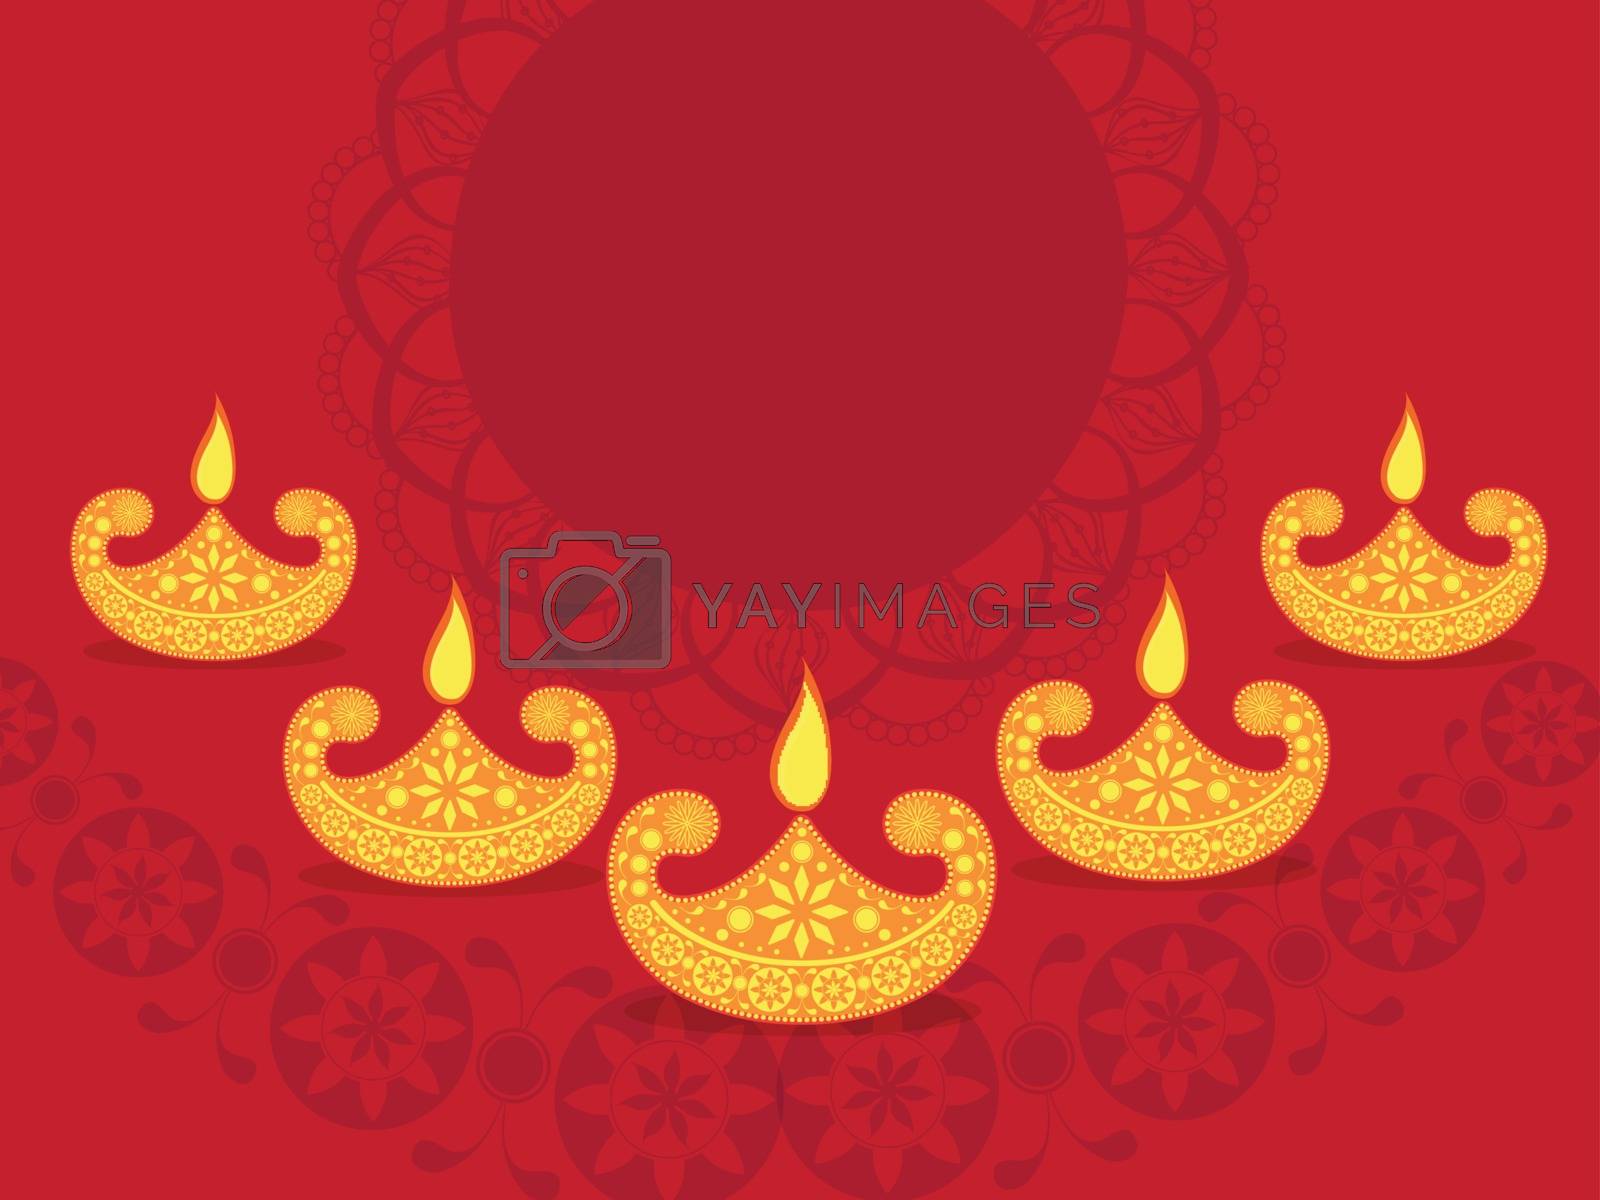 Royalty free image of Happy Diwali celebration background. by aispl